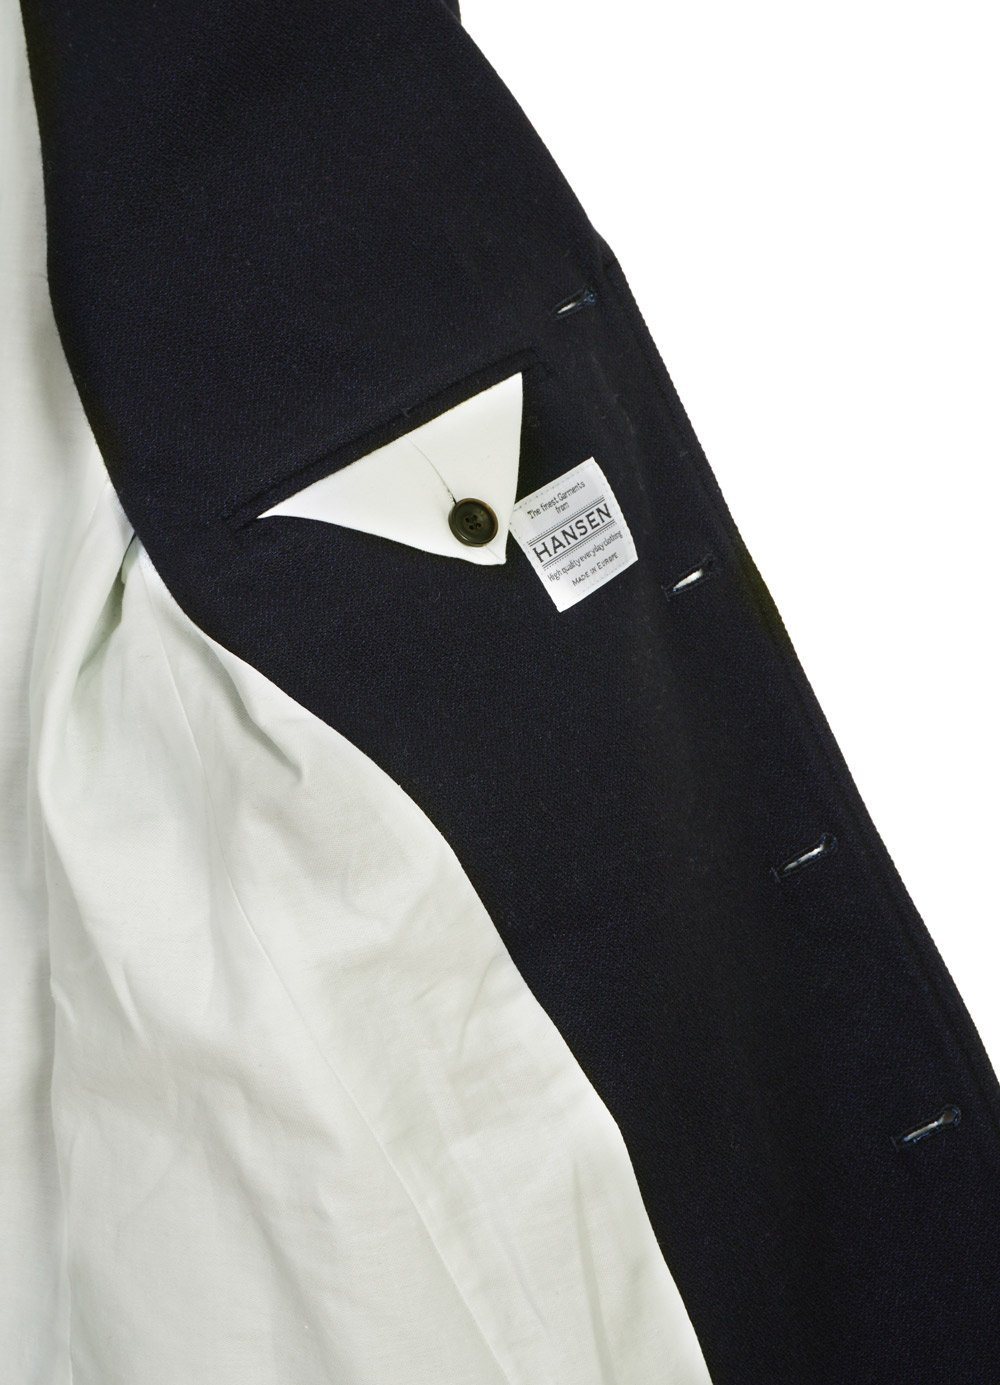 HANSEN Garments - ANKER | Four Button Classic Blazer | Deep Indigo - HANSEN Garments